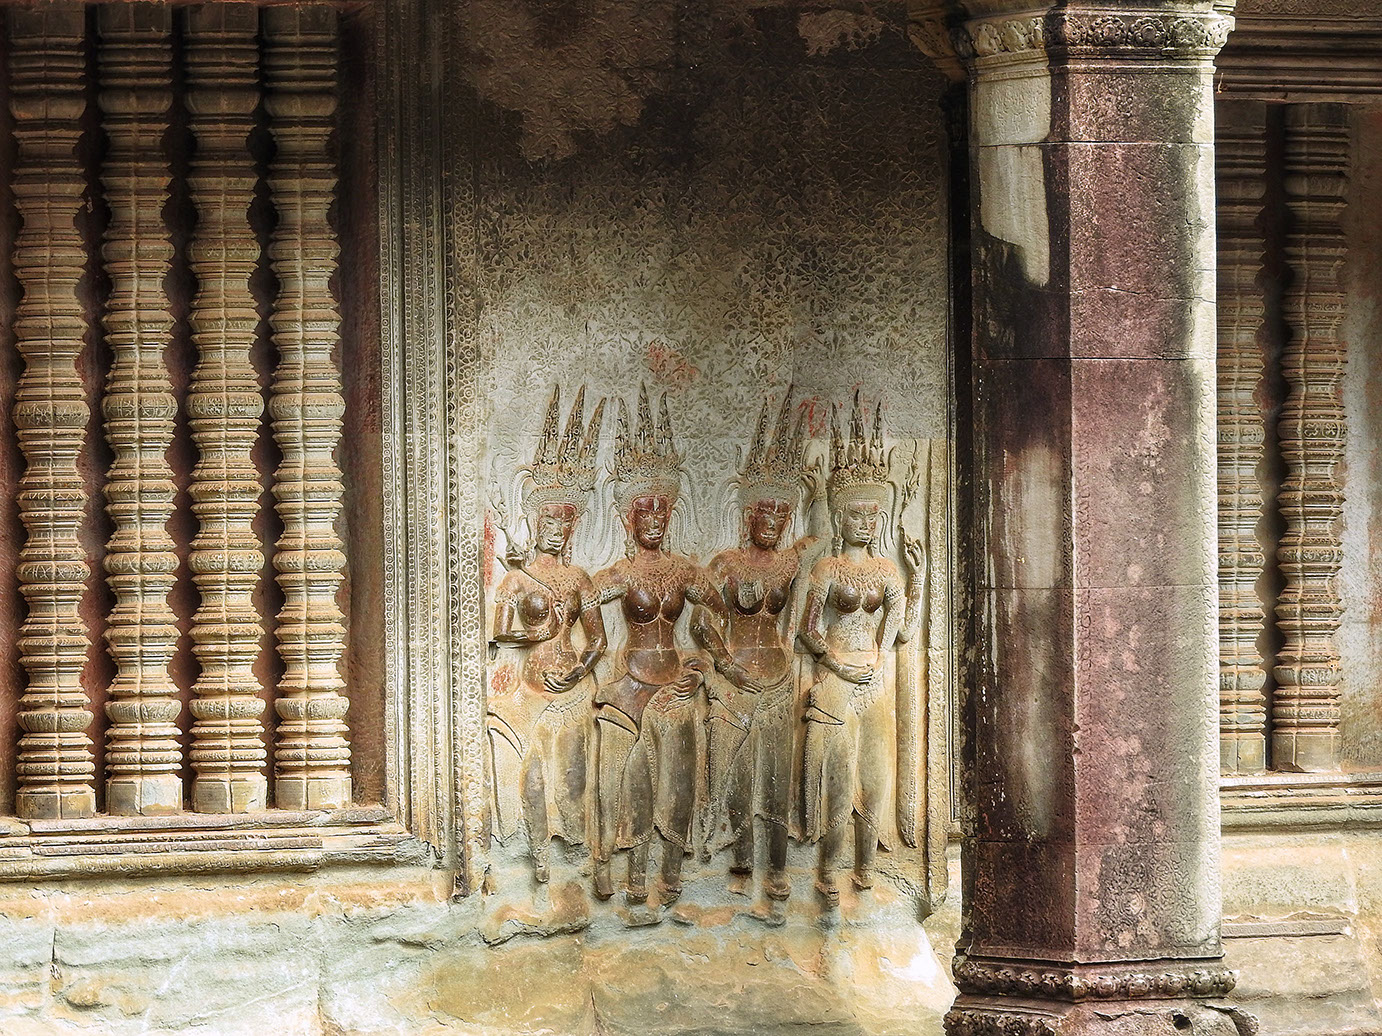 Apsaras and deities decorate Angkor Wat temple